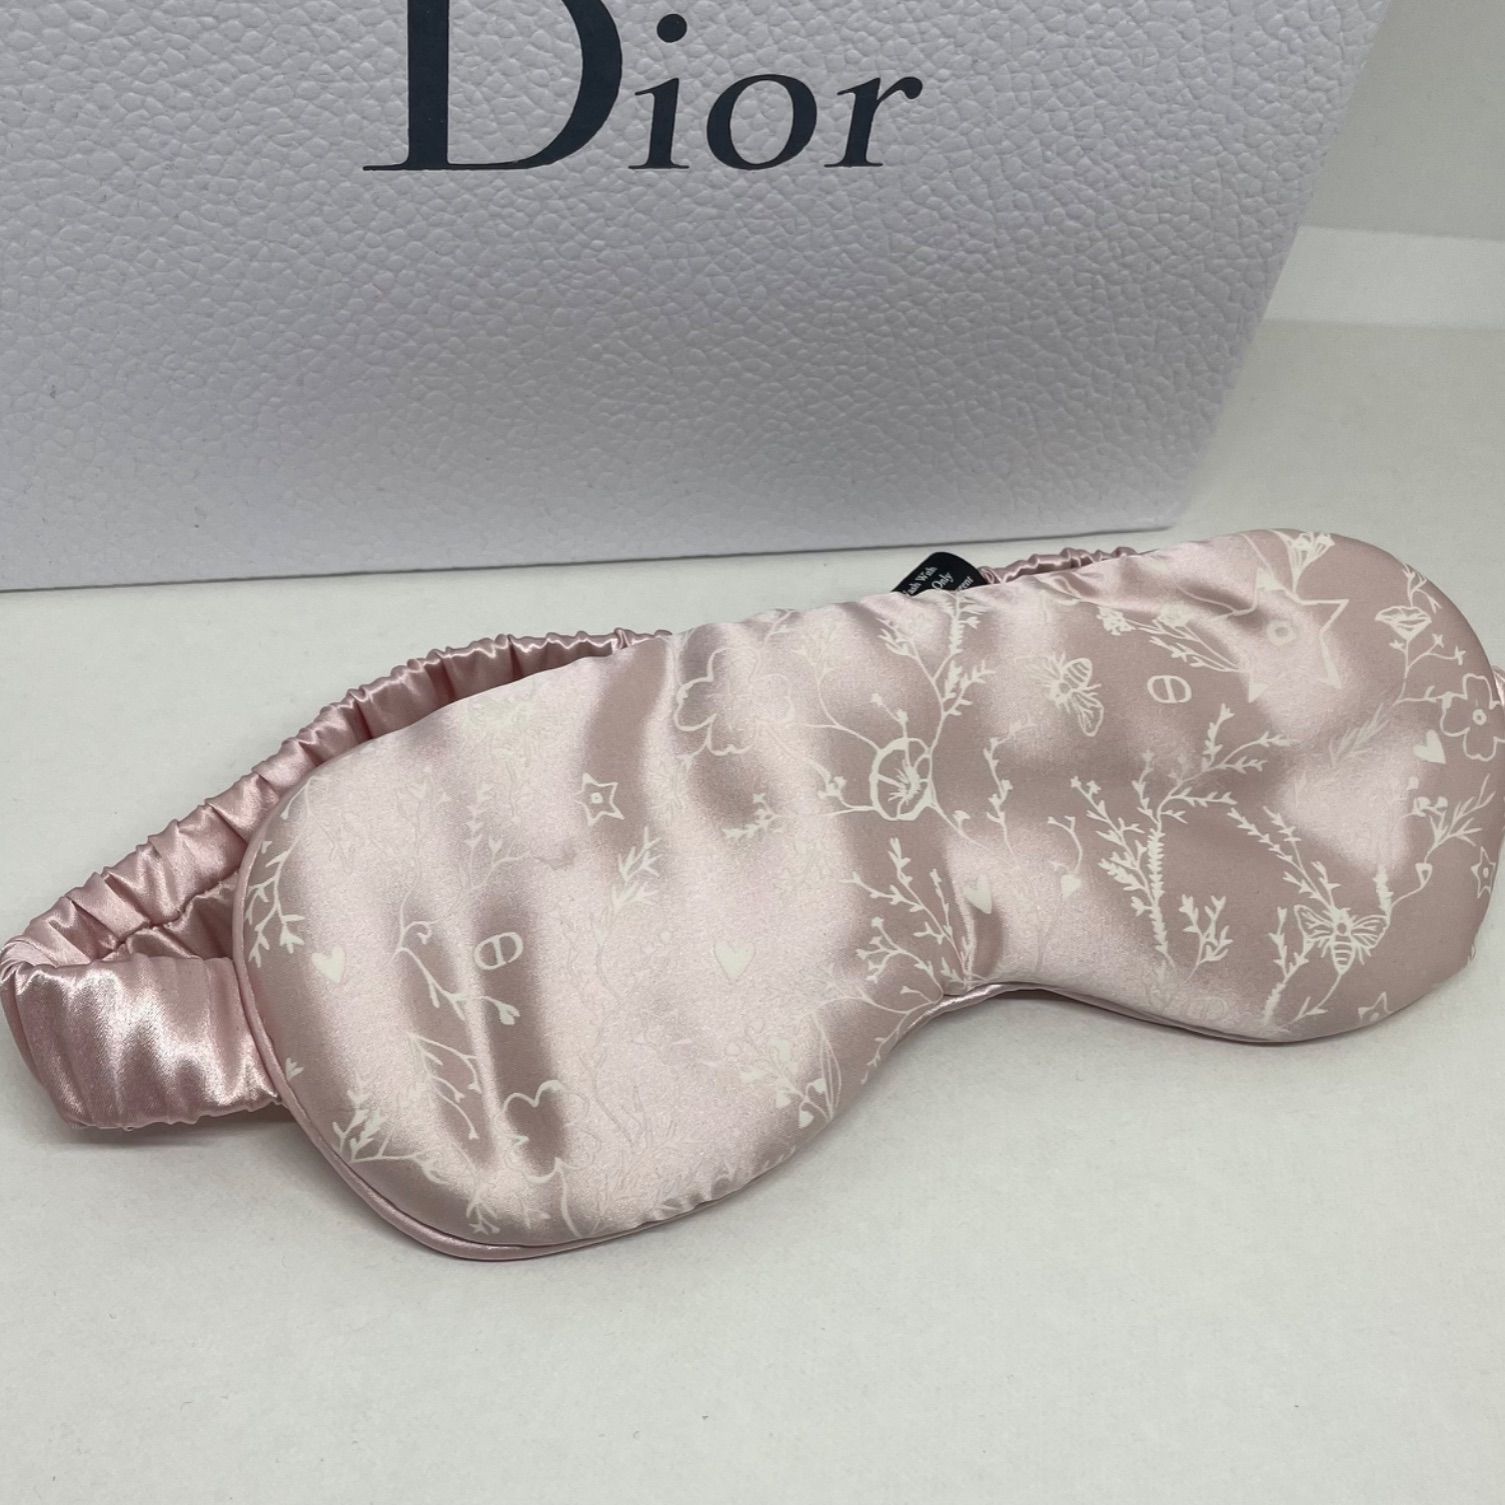 Dior Beauty アイマスク - リラクゼーショングッズ